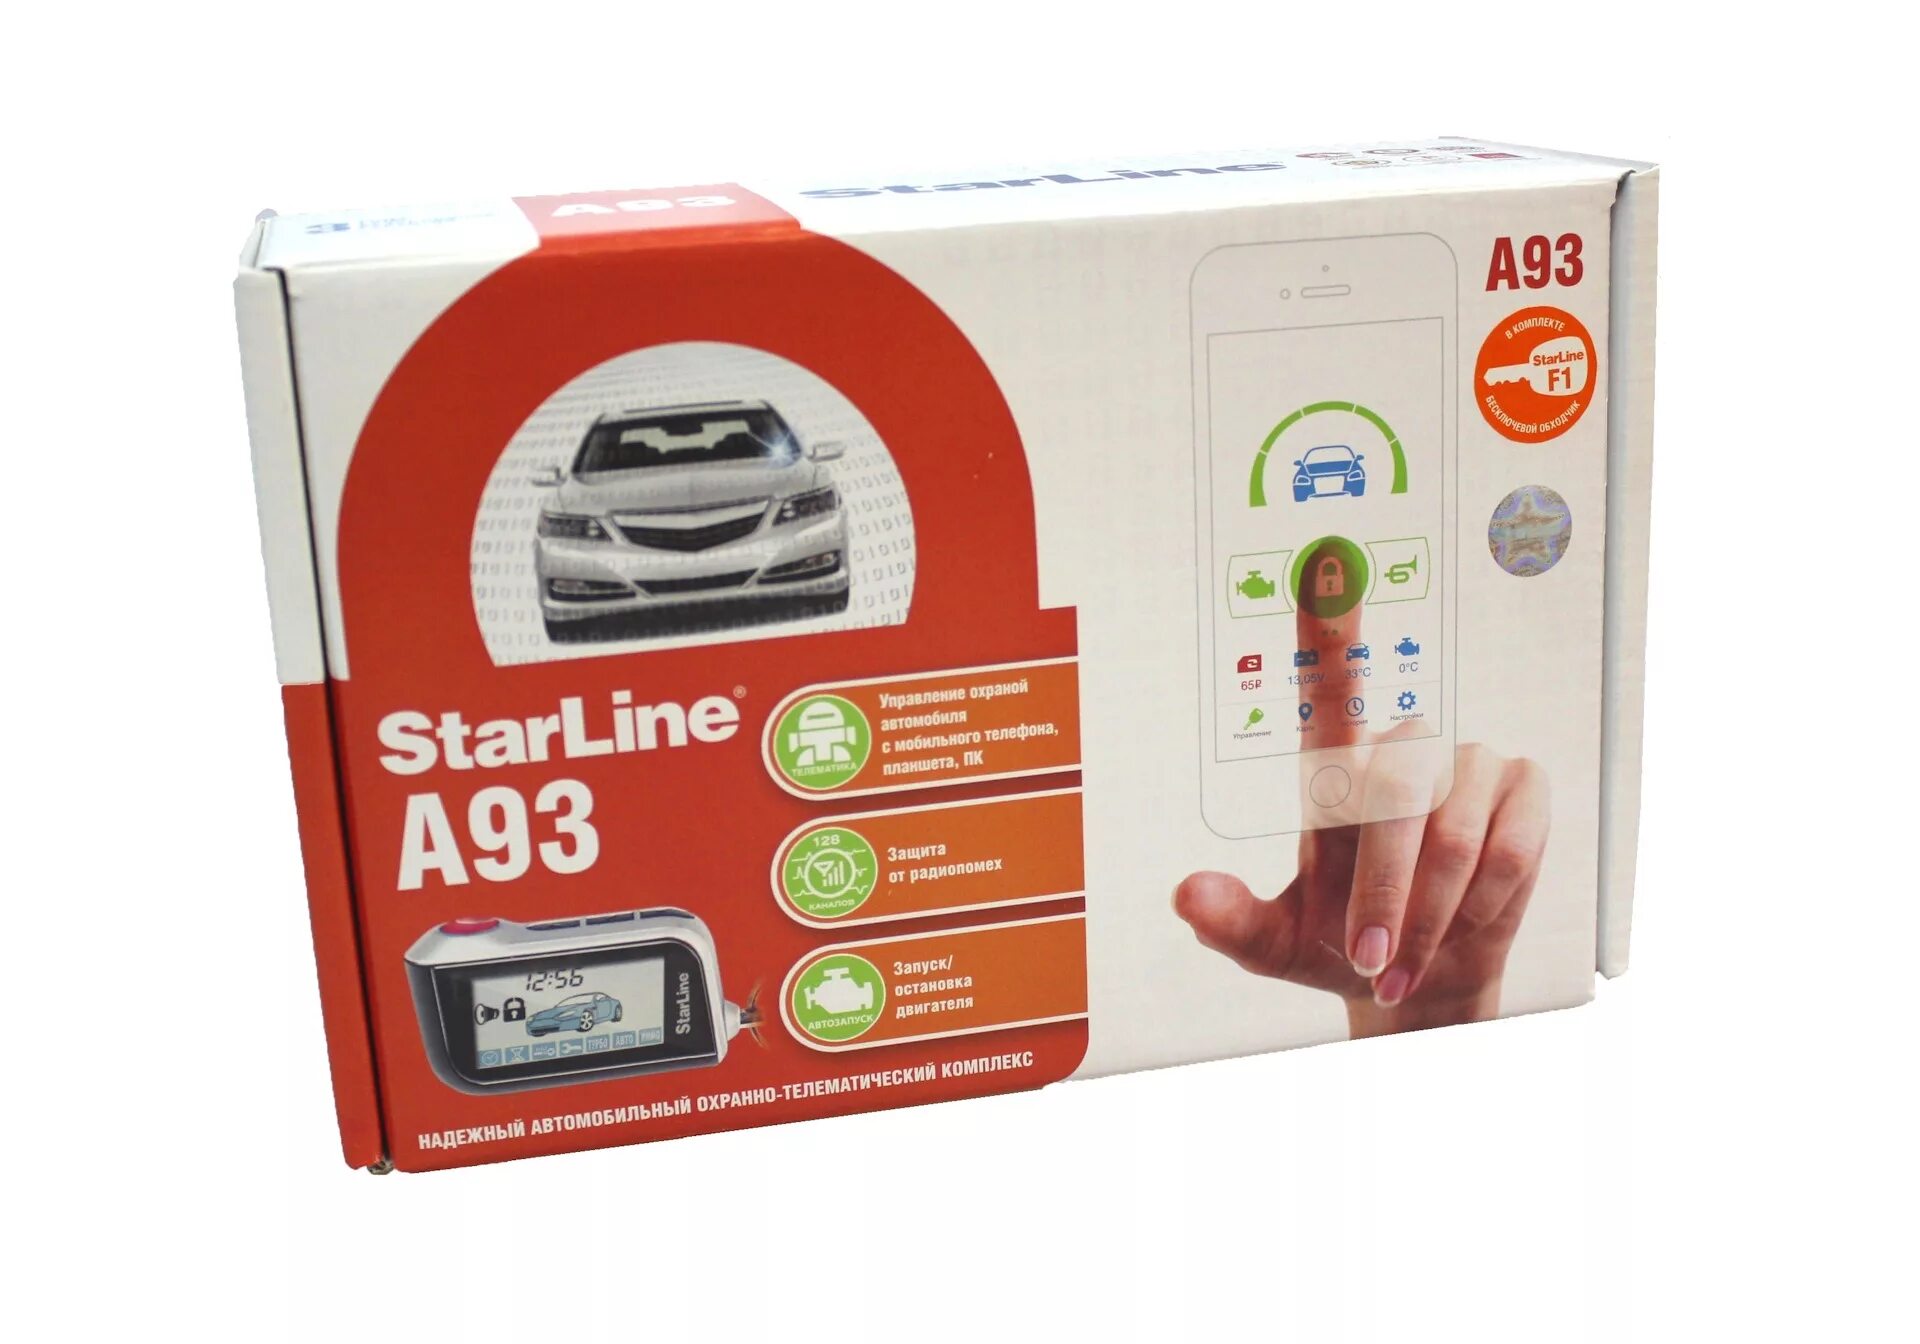 Запусти новый старлайн. Сигнализация с автозапуском STARLINE a93. Сигнализация Star line а93 (с автозапуском). Сигнализация STARLINE a93 v2 GSM. Автосигнализация STARLINE a93 Eco.